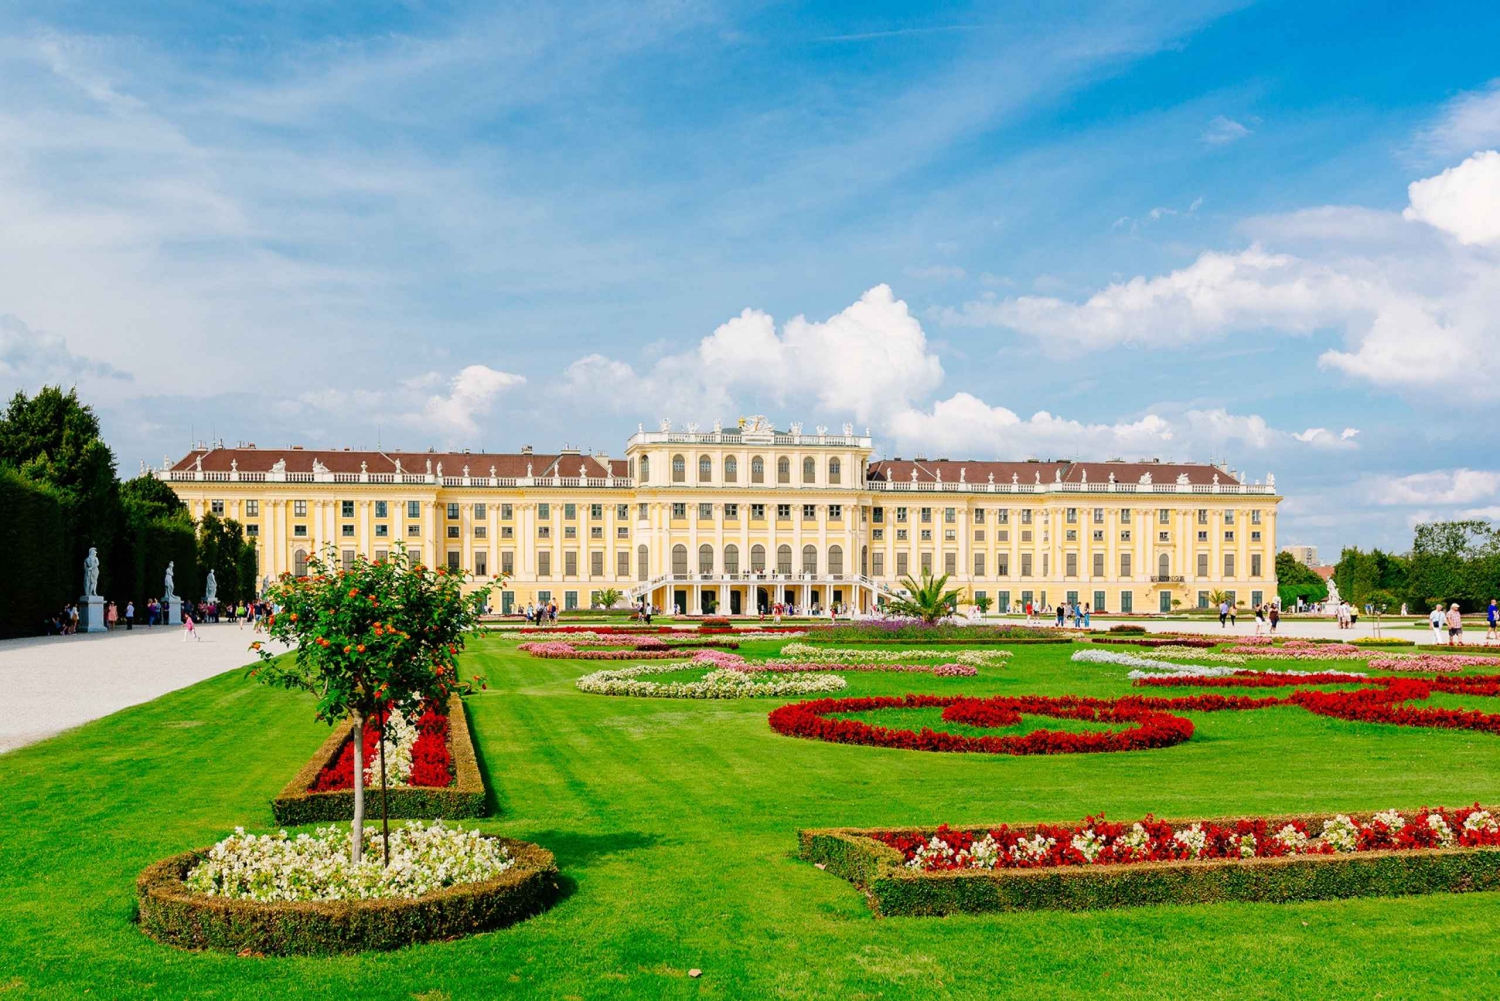 Wien: Guidet omvisning i Schönbrunn slott og hager